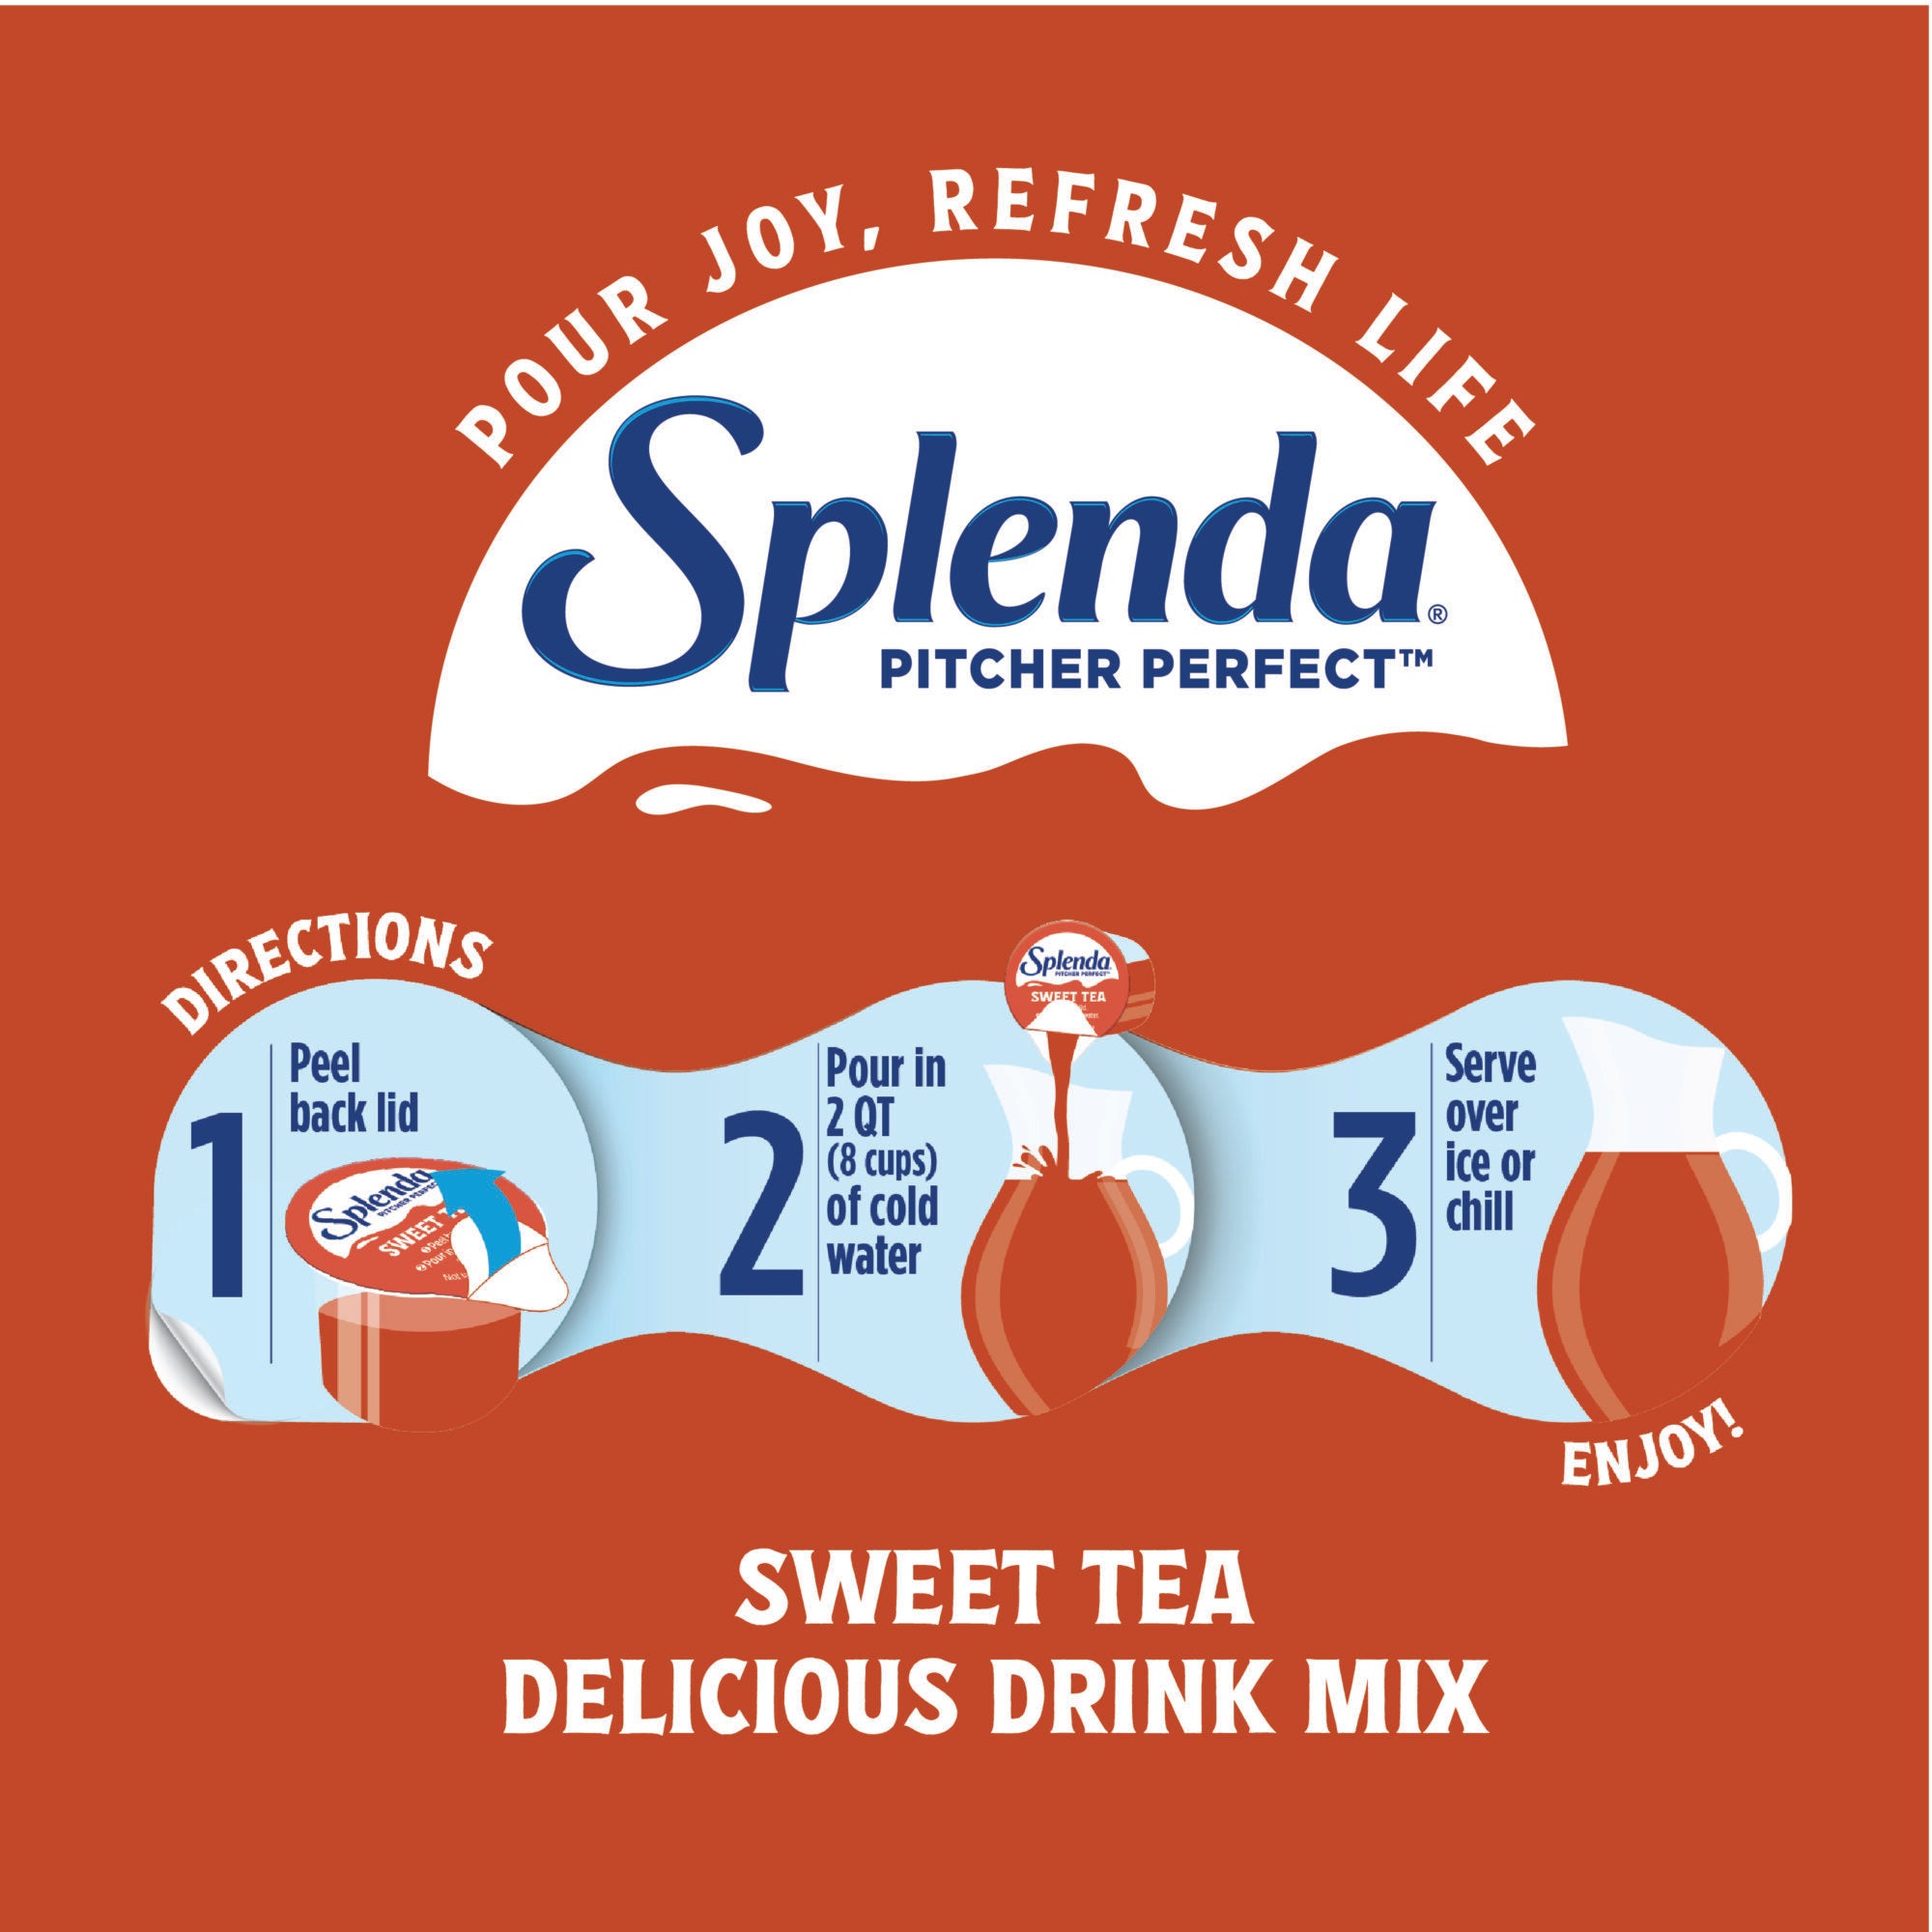 Splenda Pitcher Perfect Sweet Tea Zero Sugar Drink Mix – Instructions